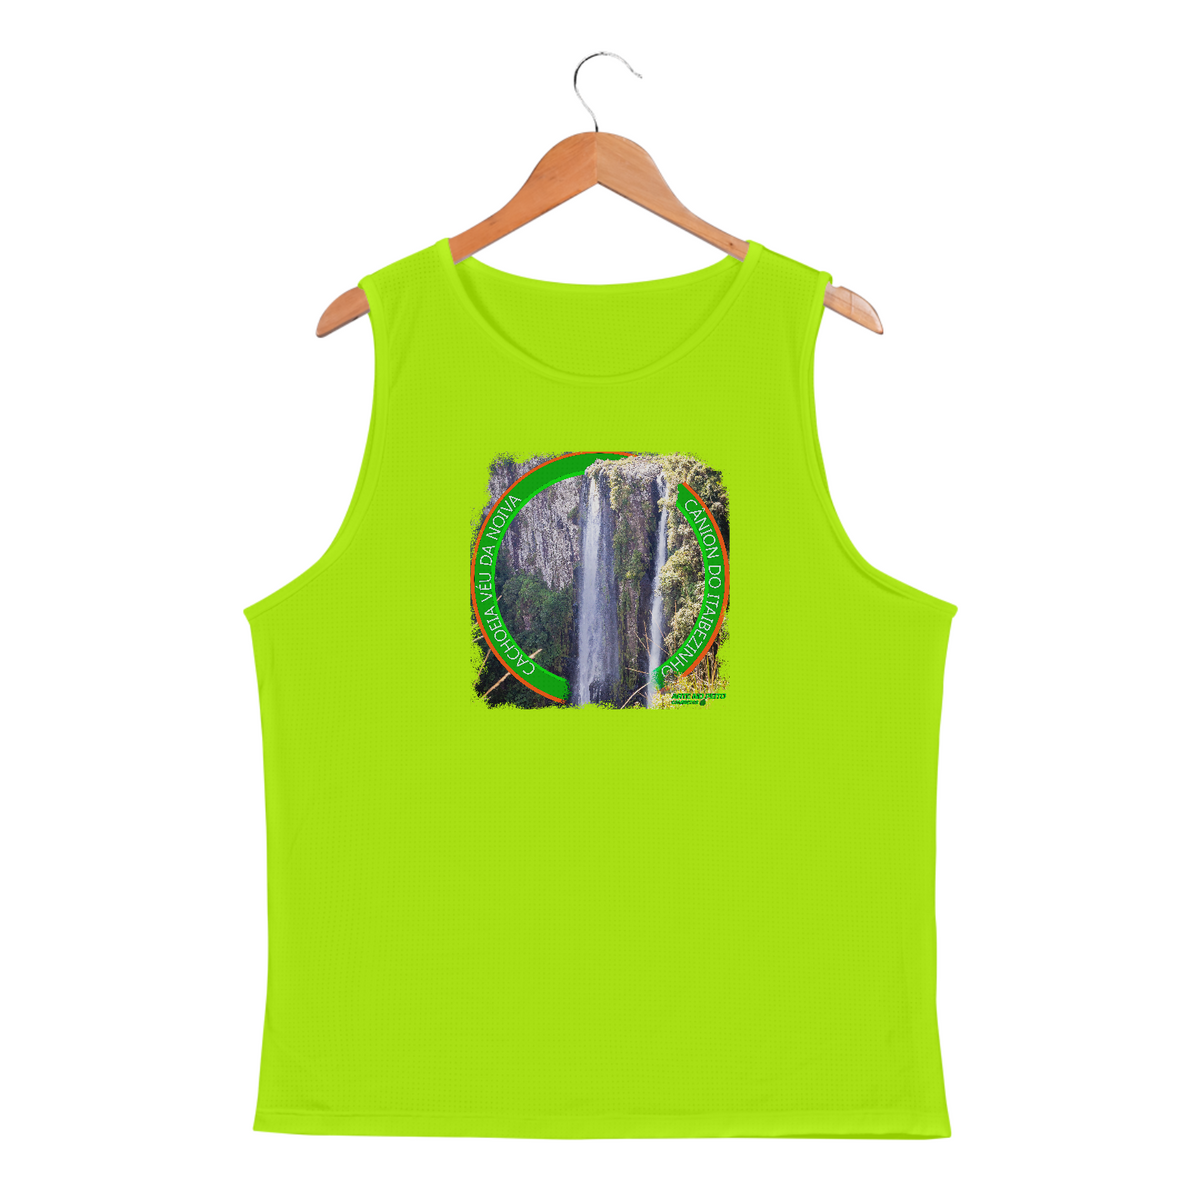 Nome do produto: Cachoeira véu da noiva canion itaibezinho   - Camiseta Regata Masculina Sport Dry Fit UV